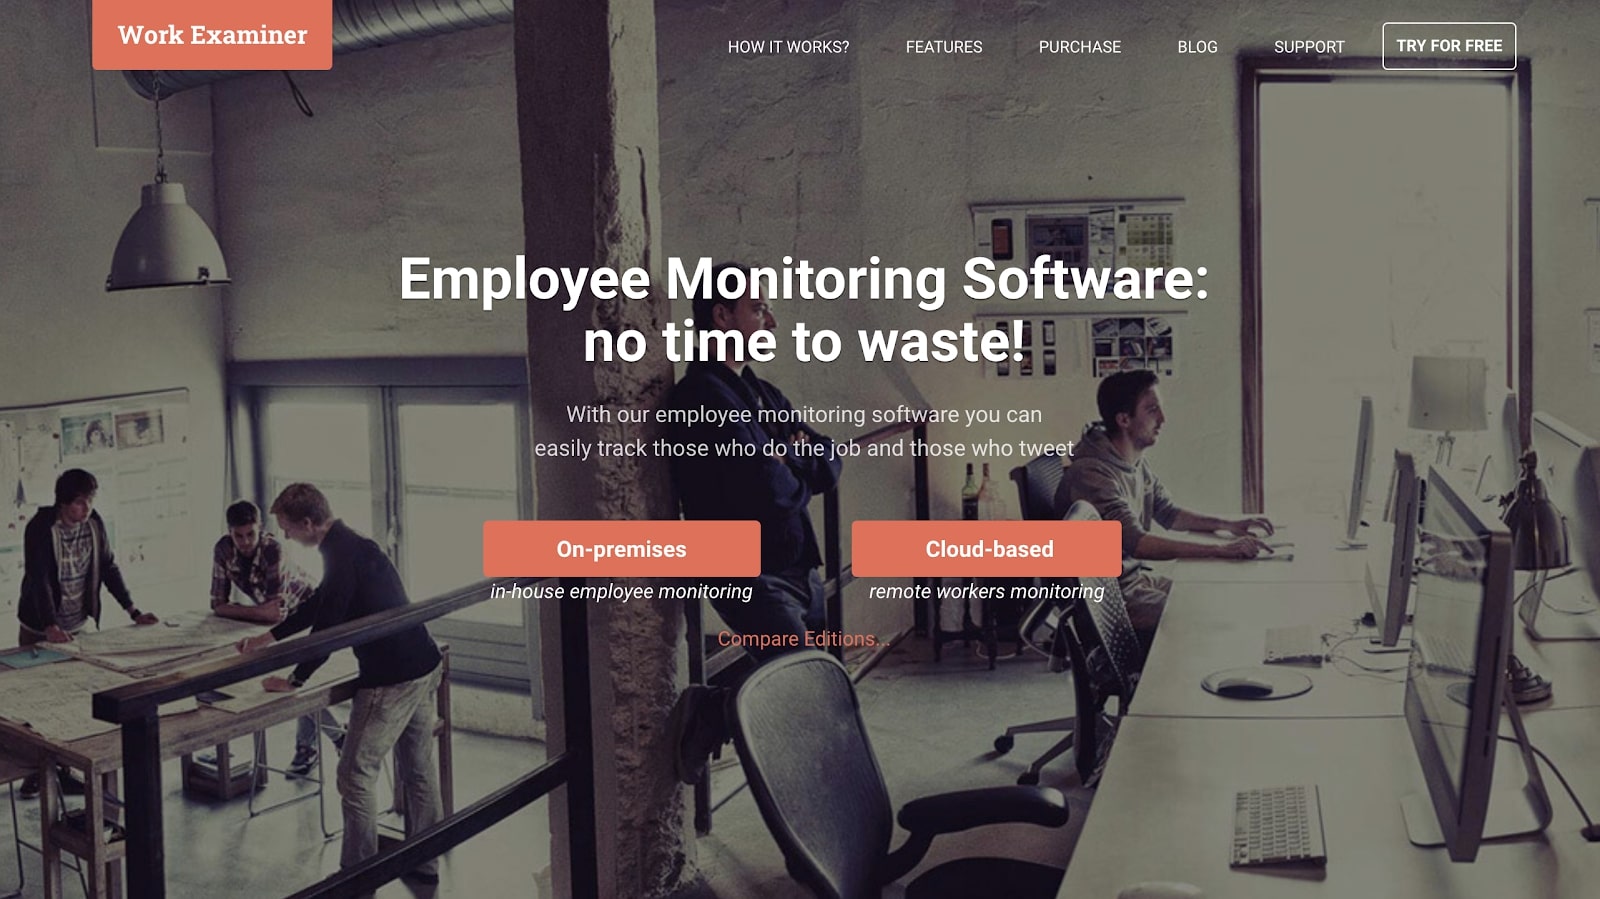 Work Examiner employee monitoring software | TechRadar